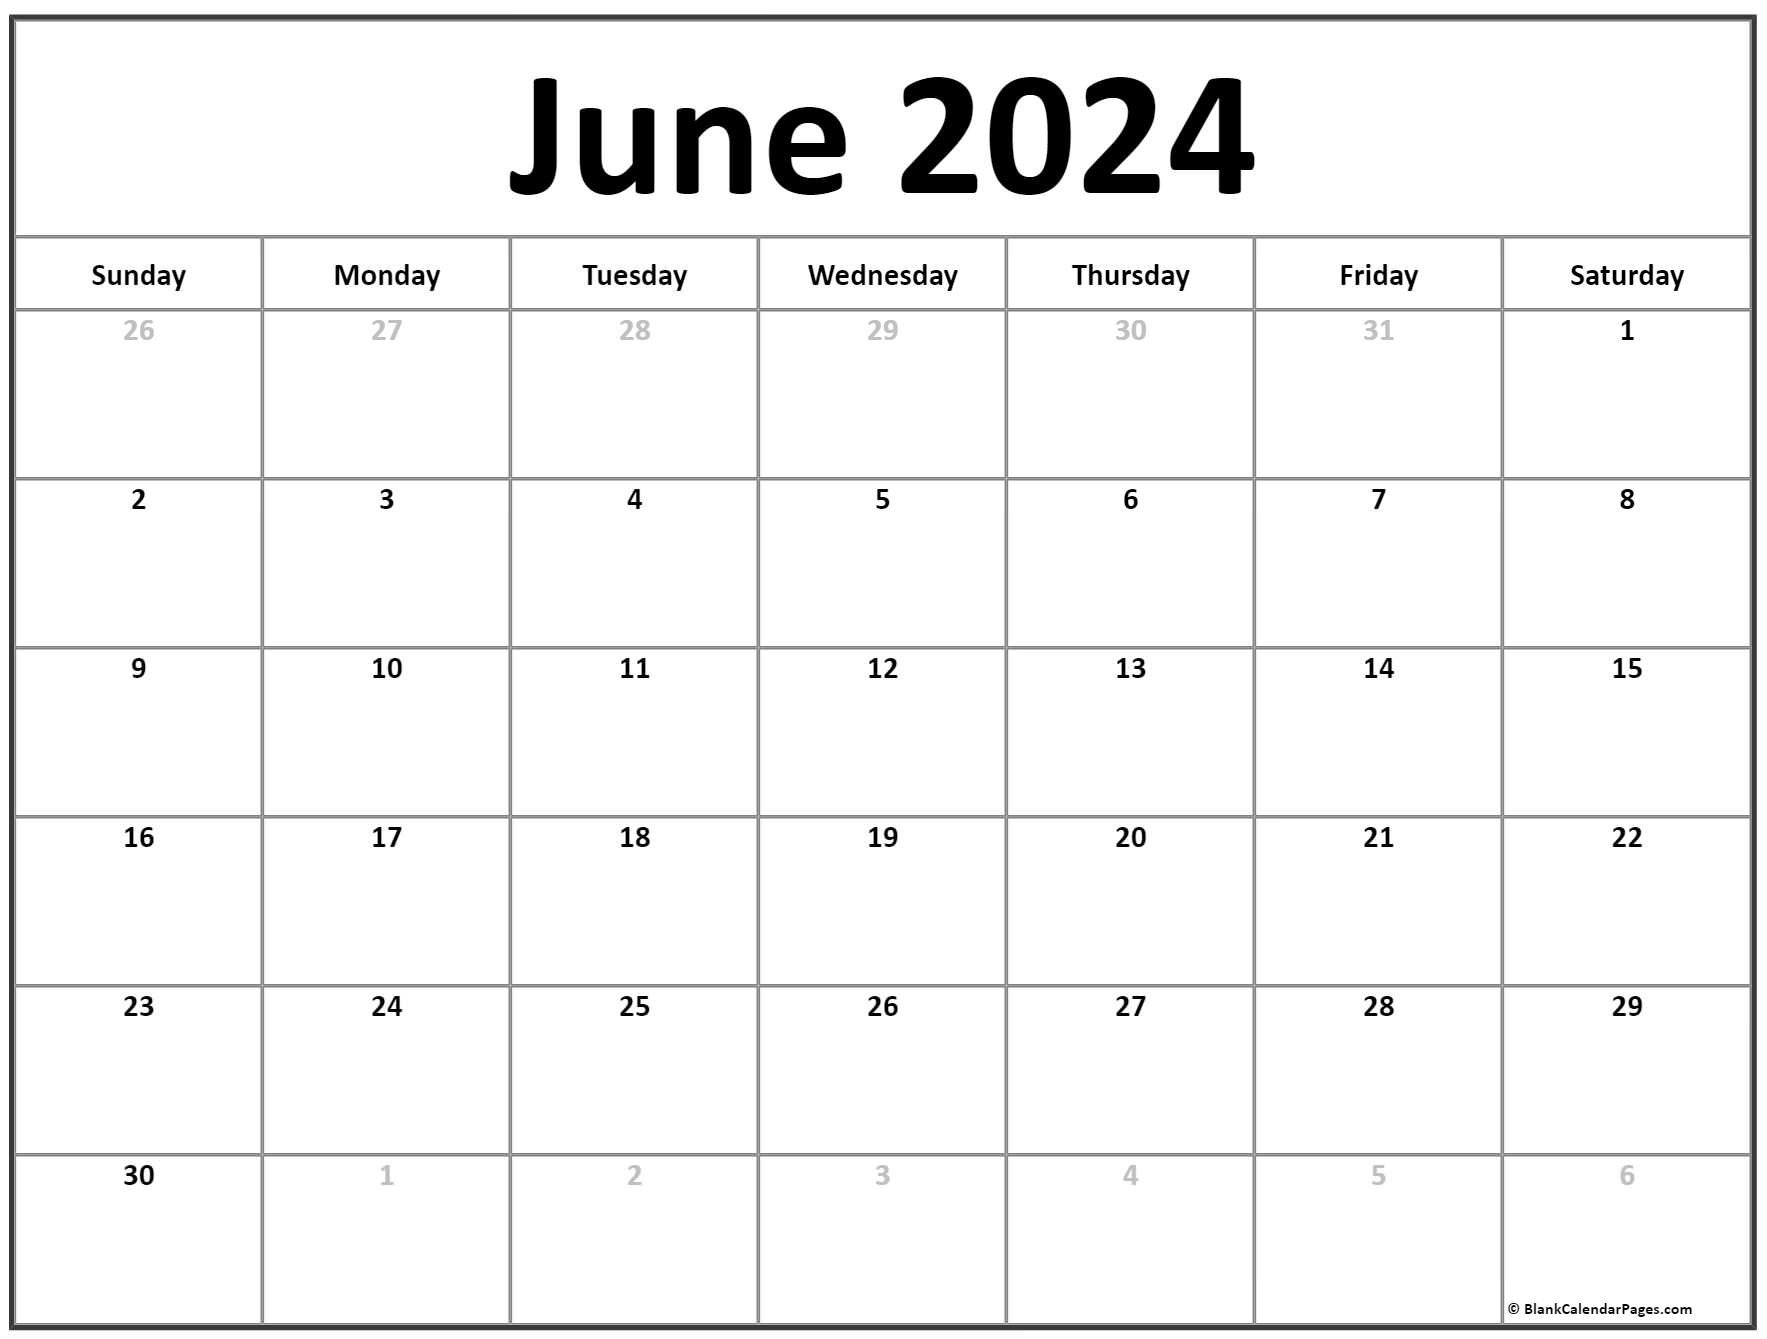 June 2020 calendar free printable monthly calendars